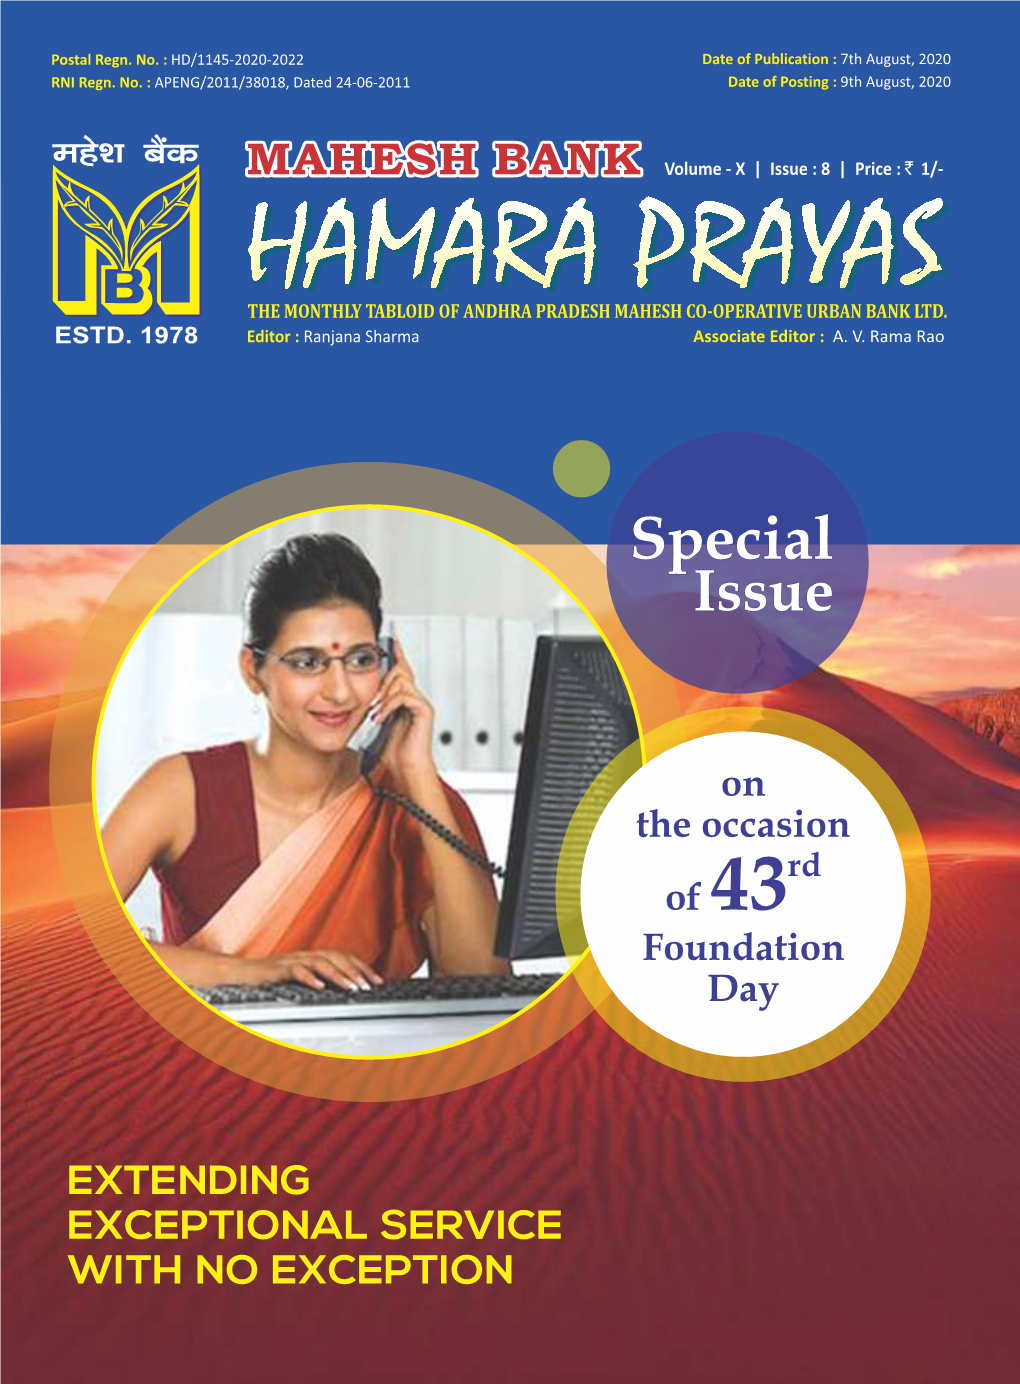 Hamara Prayasprayas the Monthly Tabloid of Andhra Pradesh Mahesh Co-Operative Urban Bank Ltd